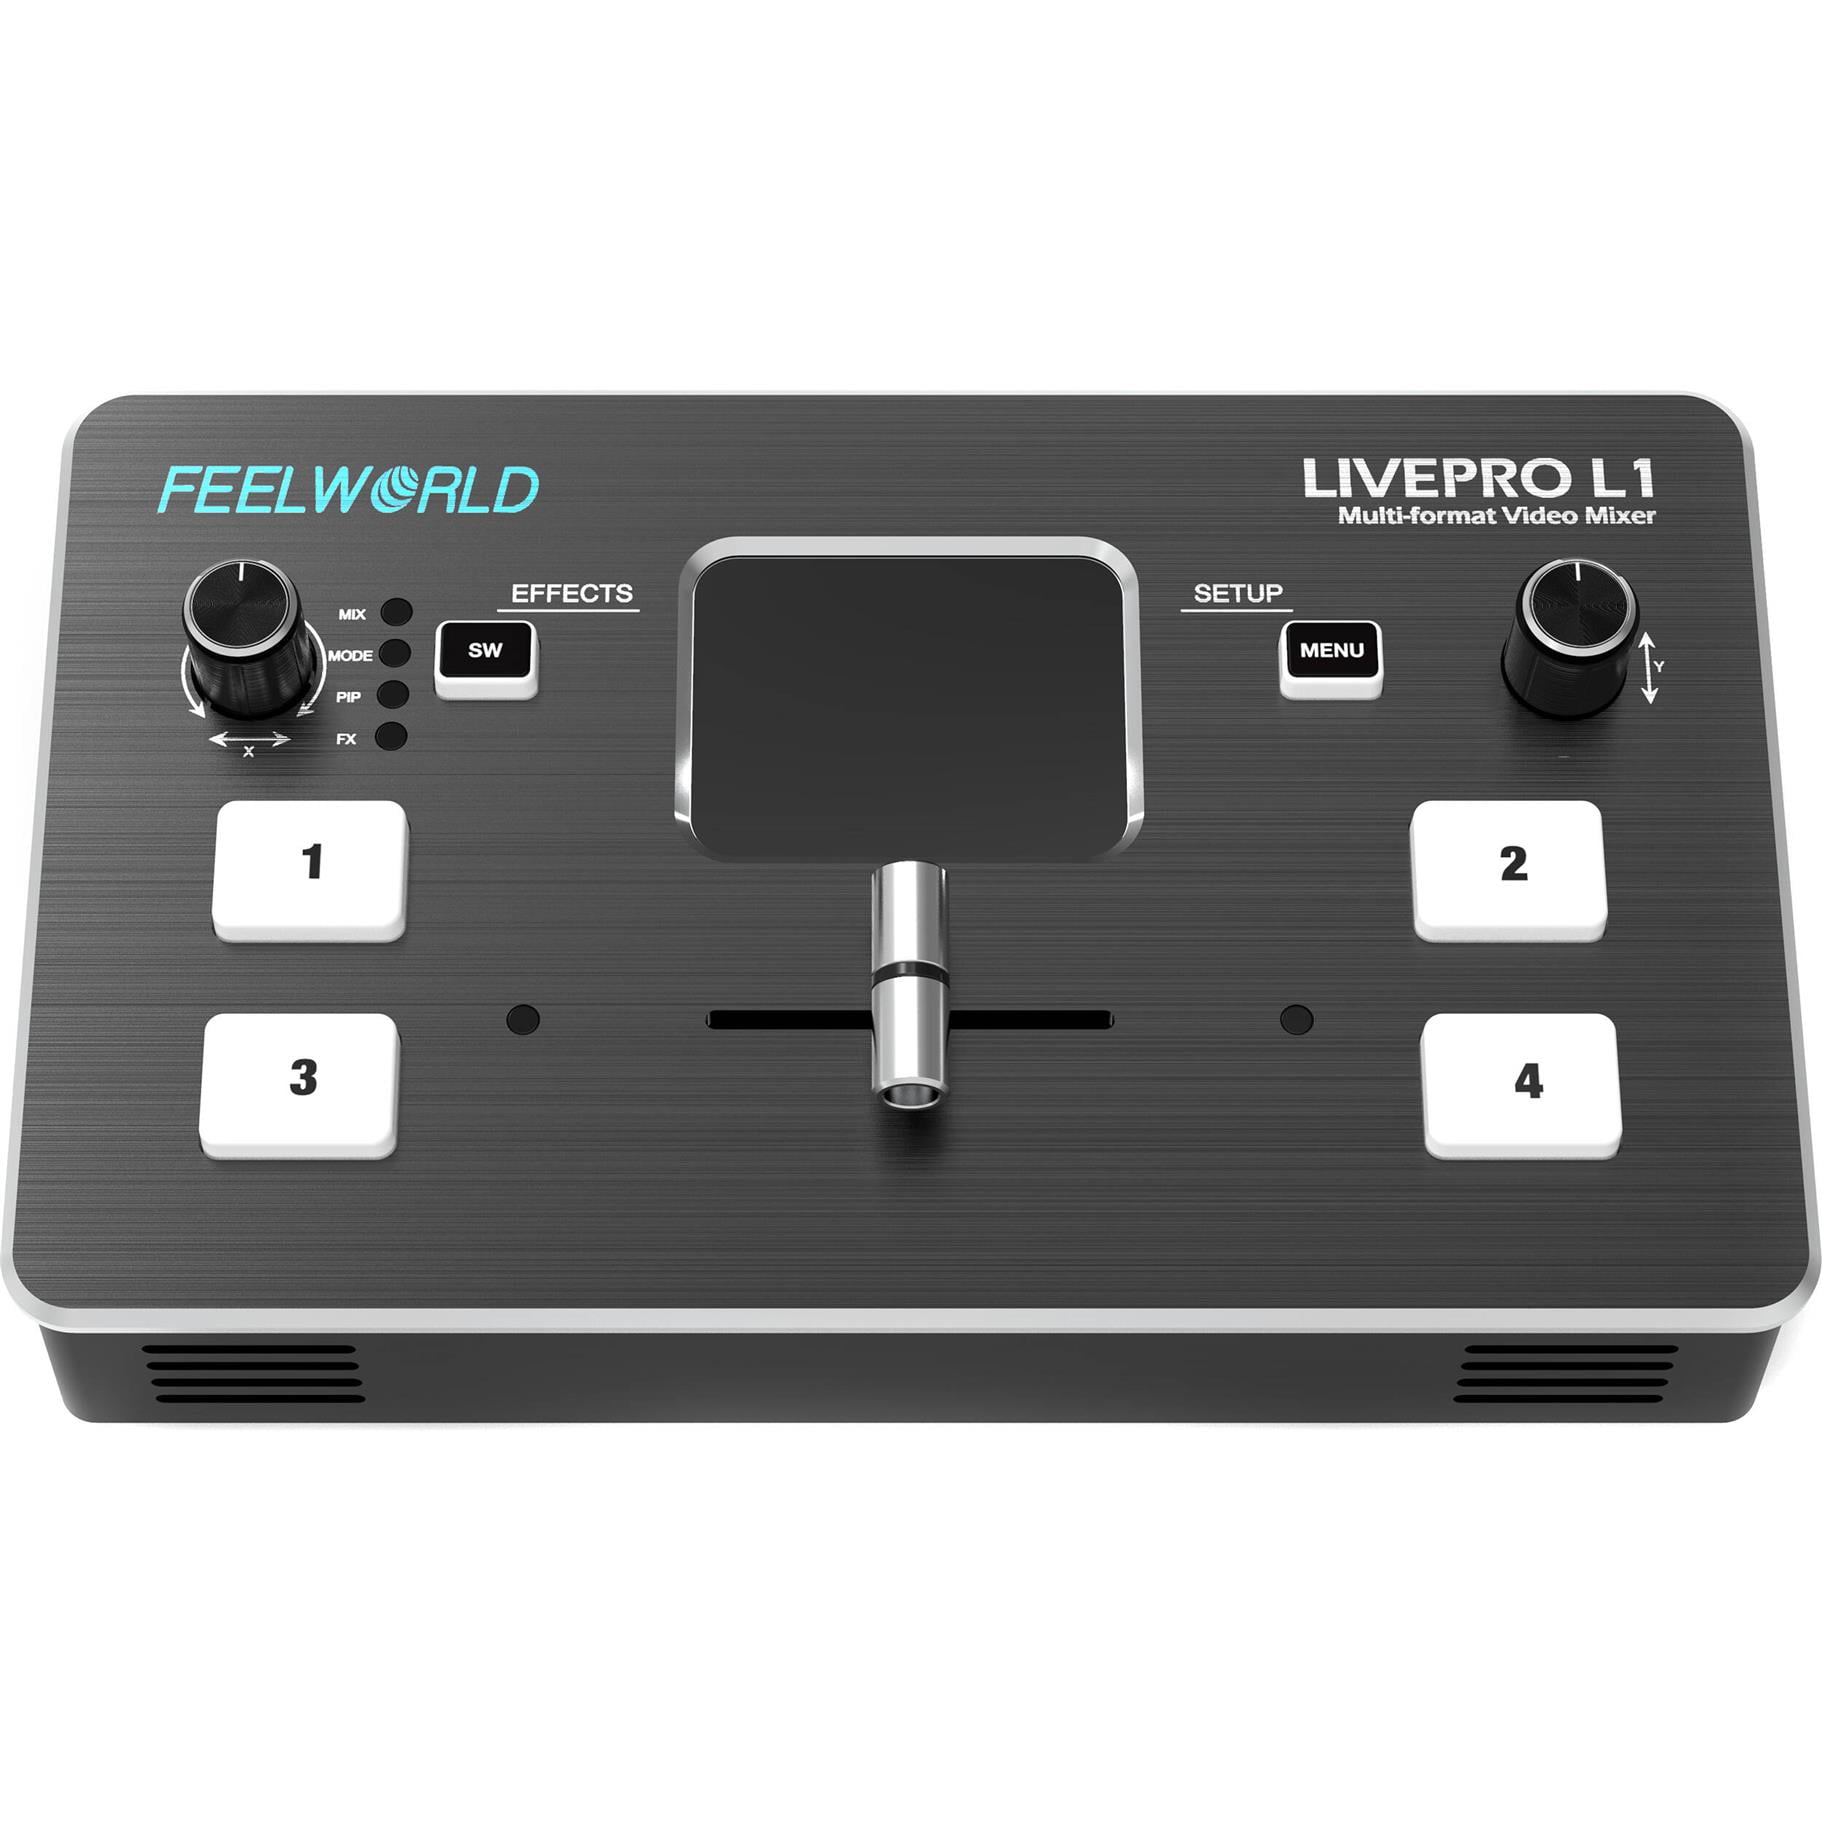 FeelWorld LIVE PRO L1 Multicamera Video Switcher with 4 x HDMI & USB Streaming - Walmart.com